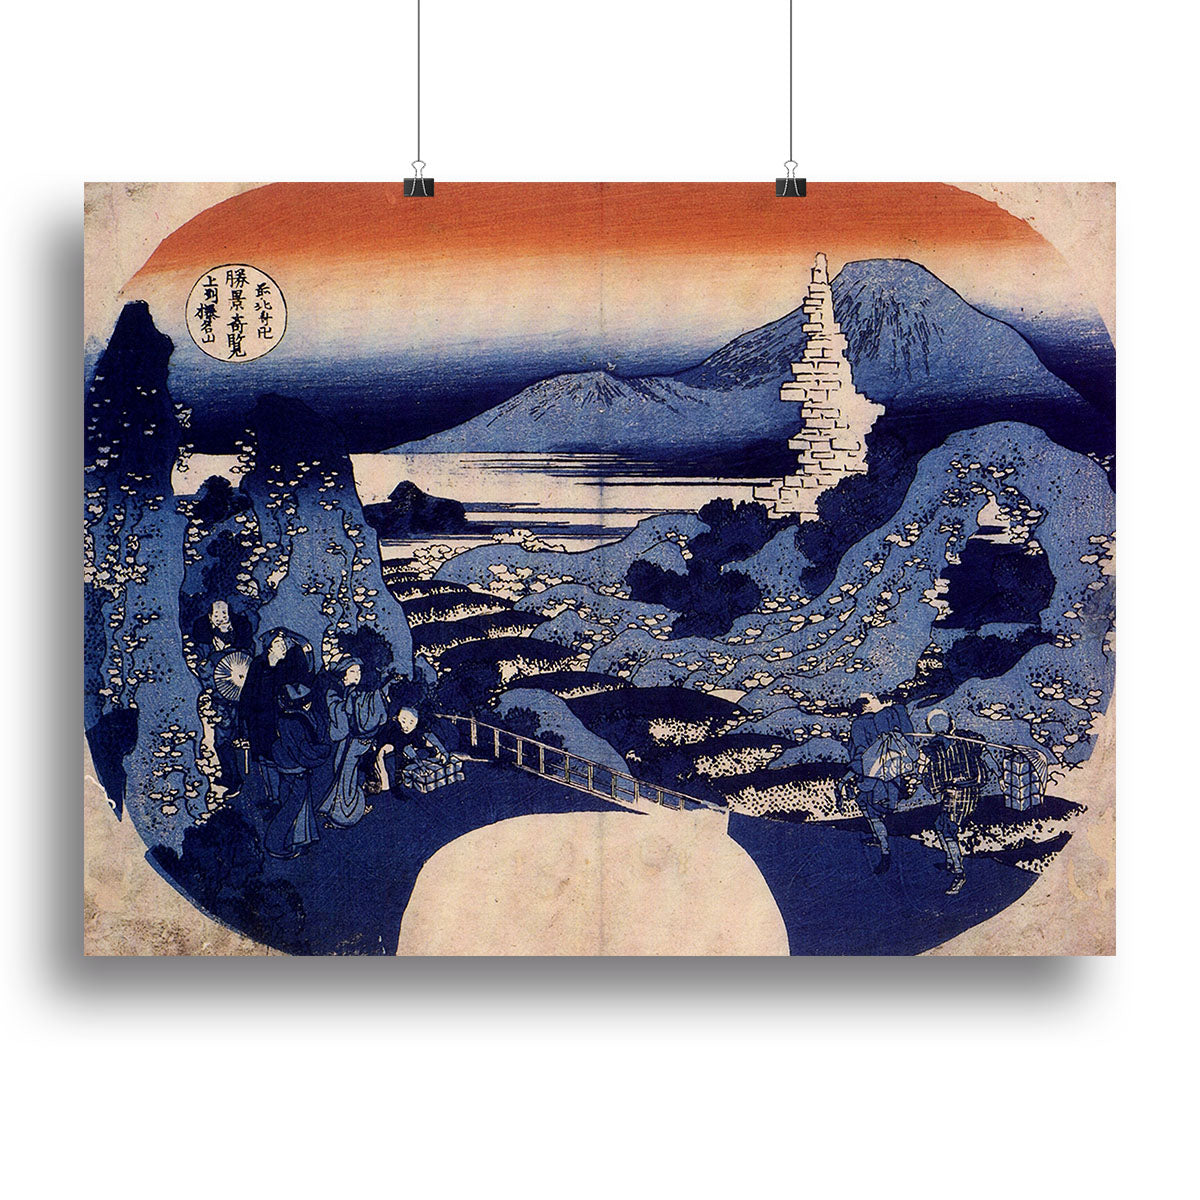 Mount Haruna by Hokusai Canvas Print or Poster - Canvas Art Rocks - 2